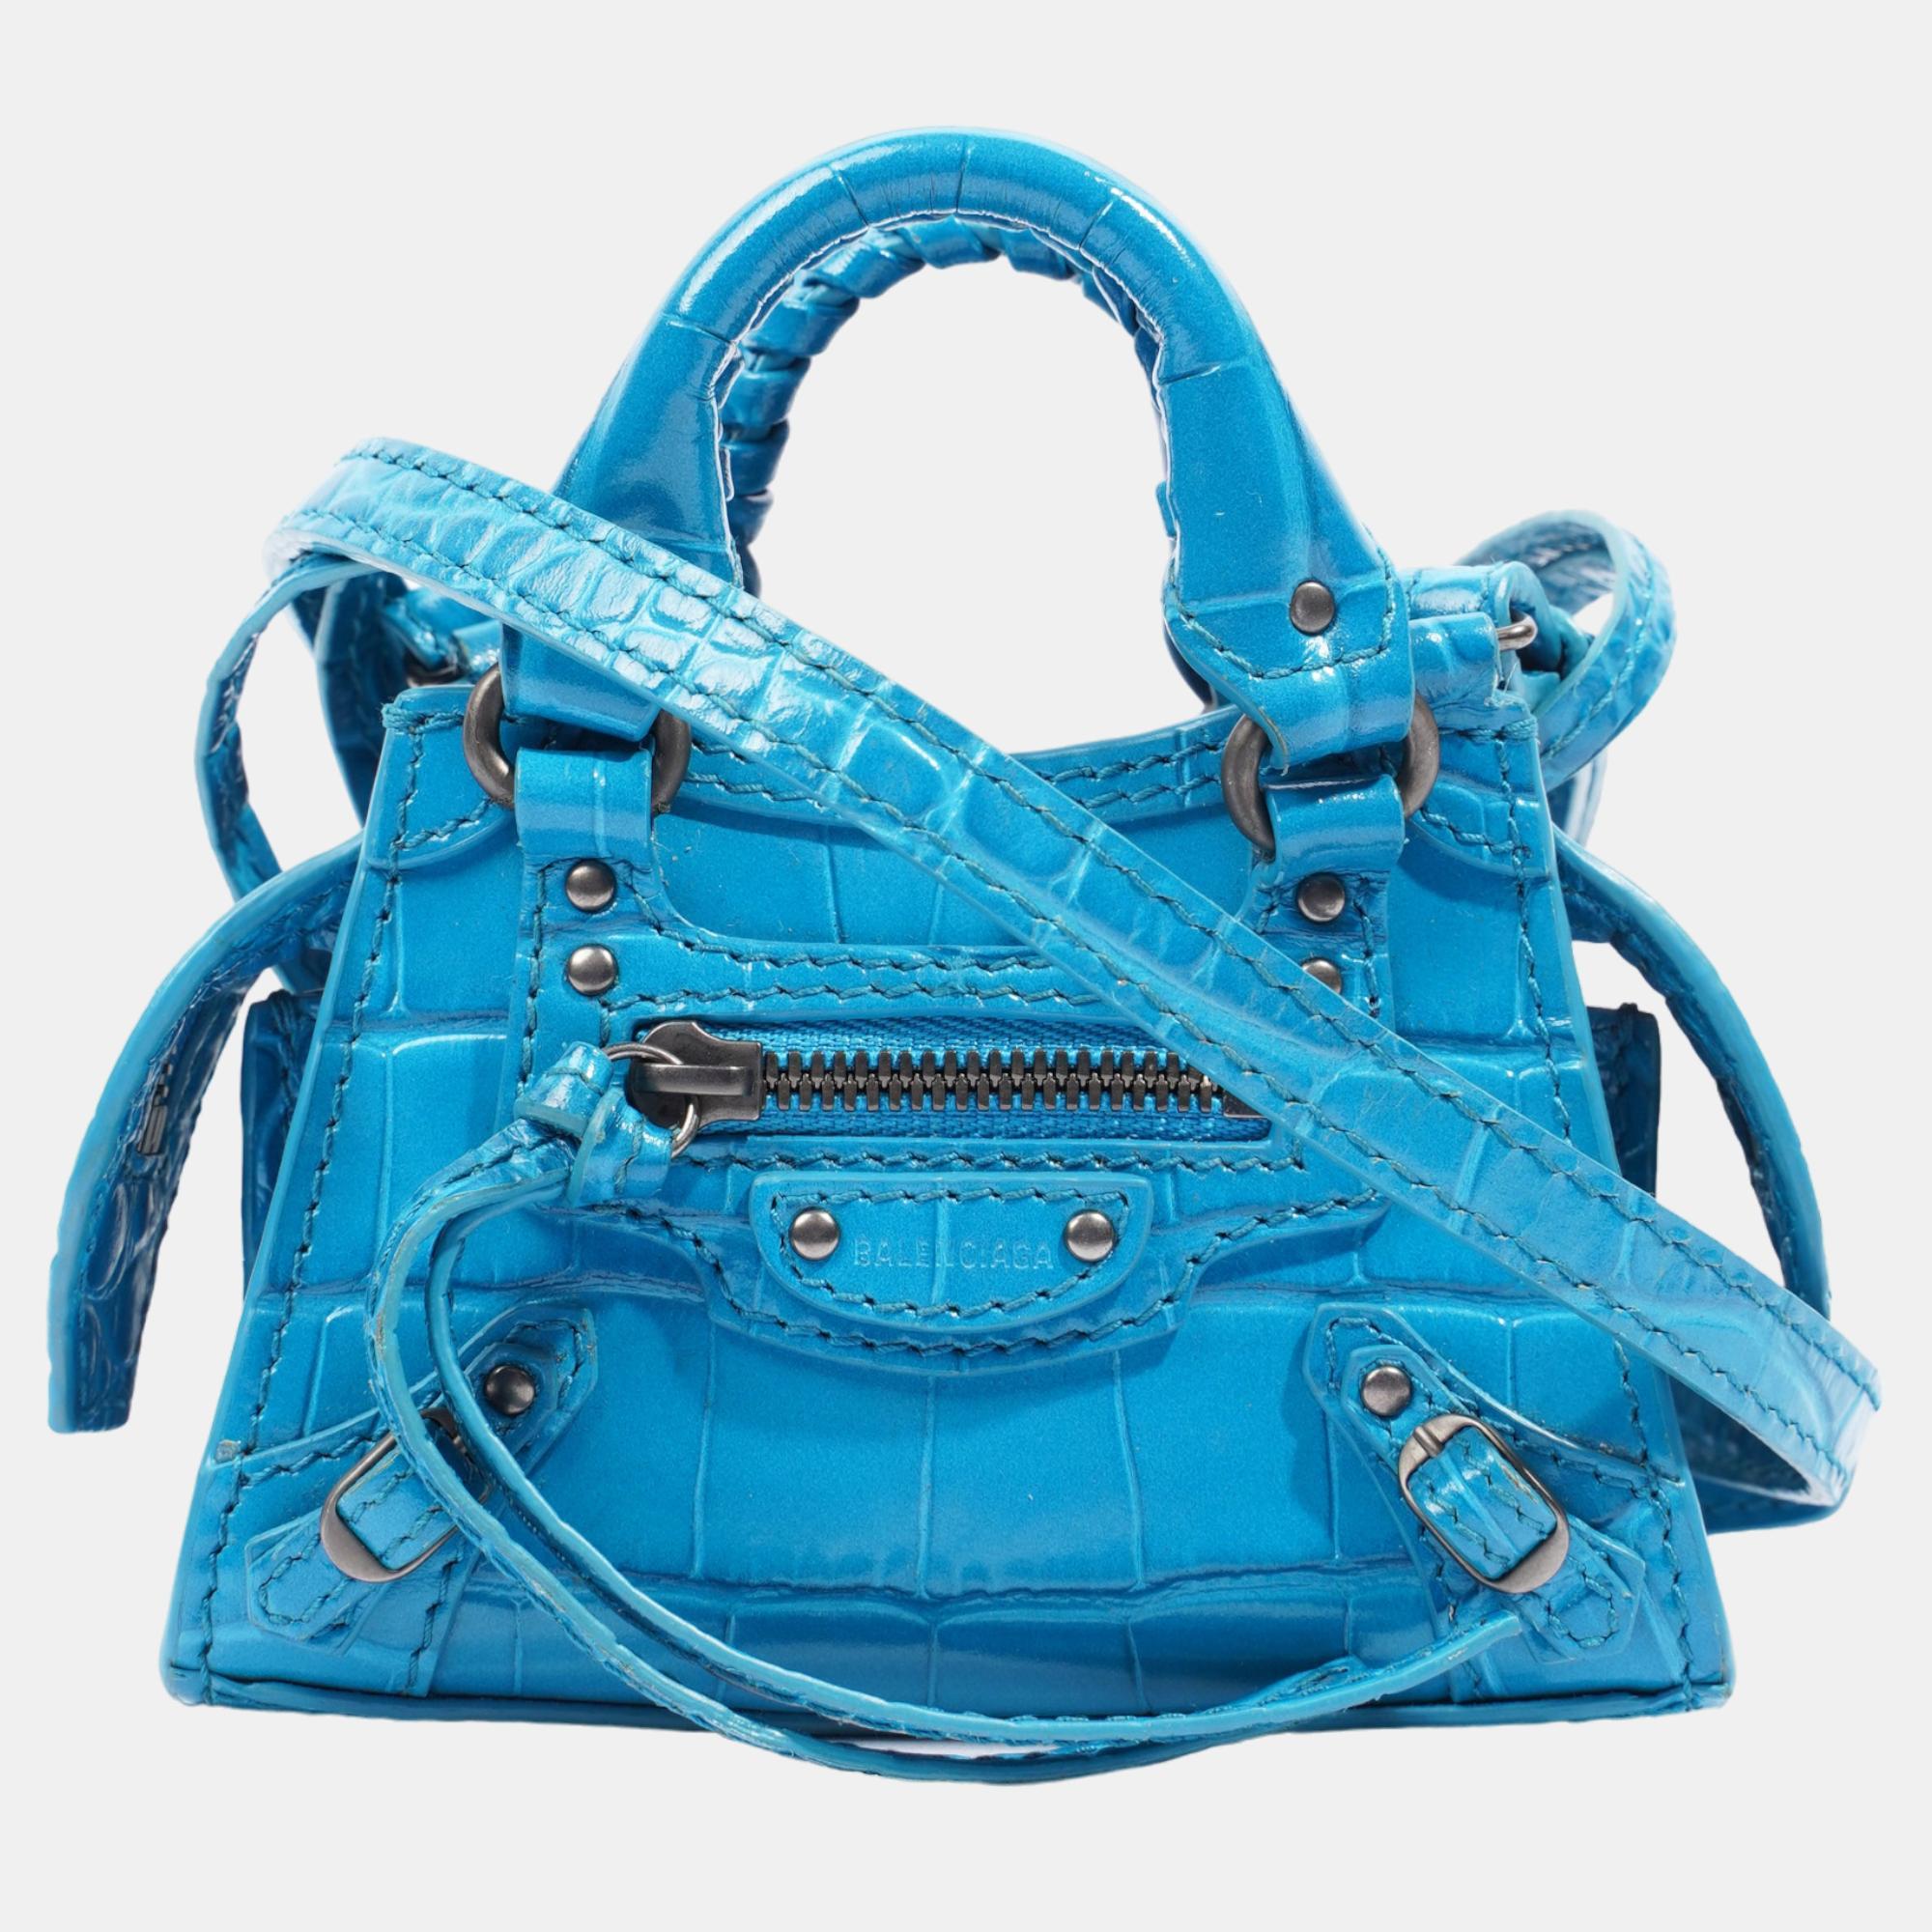 Balenciaga city bag blue embossed leather nano